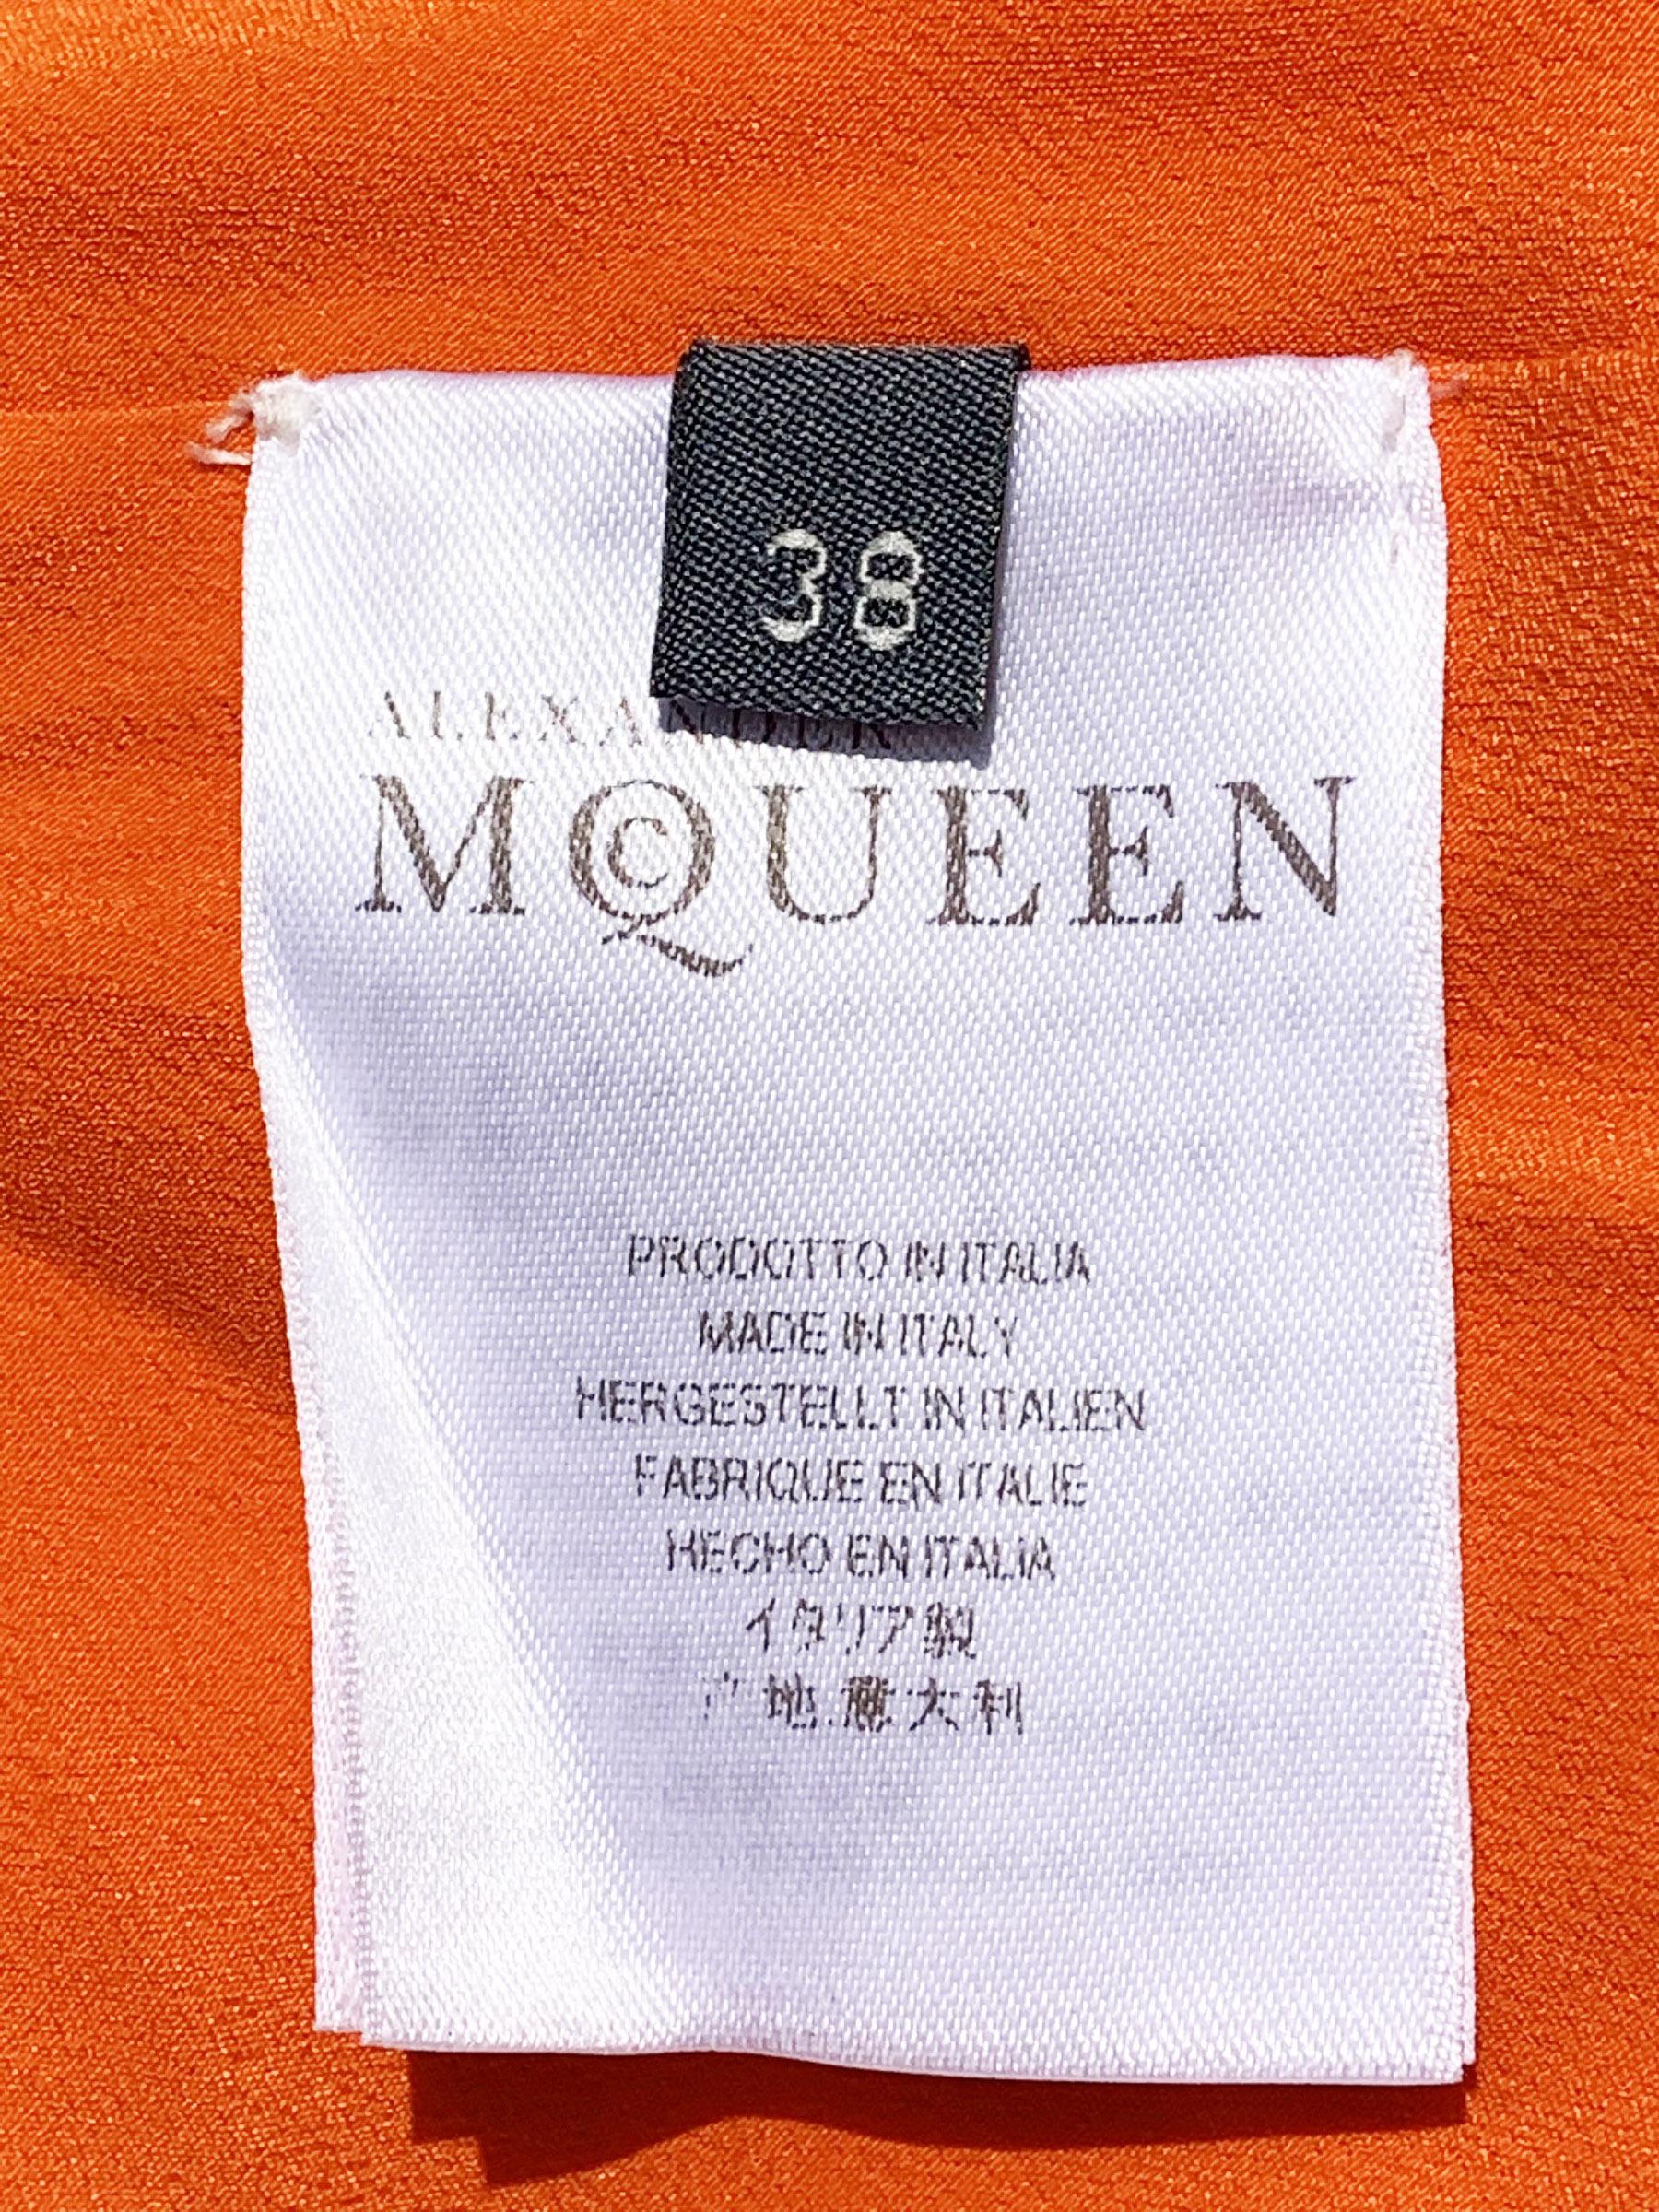 New Alexander McQueen S/S 2013 Red Carpet Jeweled Orange Halter Stretch Dress 38 For Sale 5